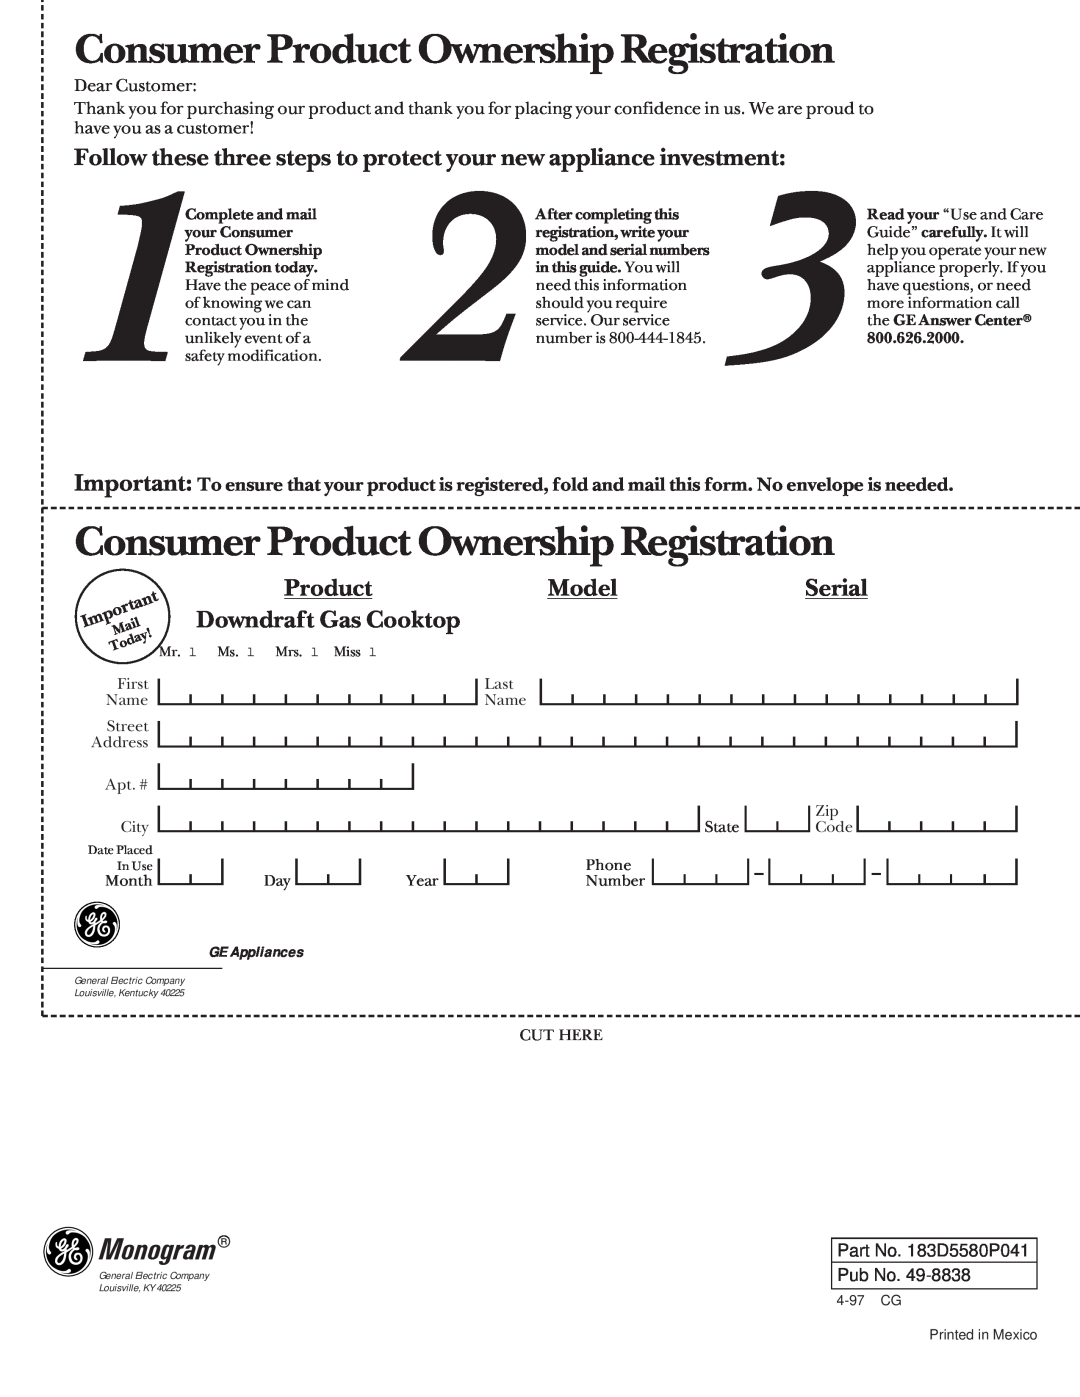 GE Monogram Downdraft Gas Cooktop manual Consumer Product Ownership Registration, ModelSerial, Monogram, GE Appliances 